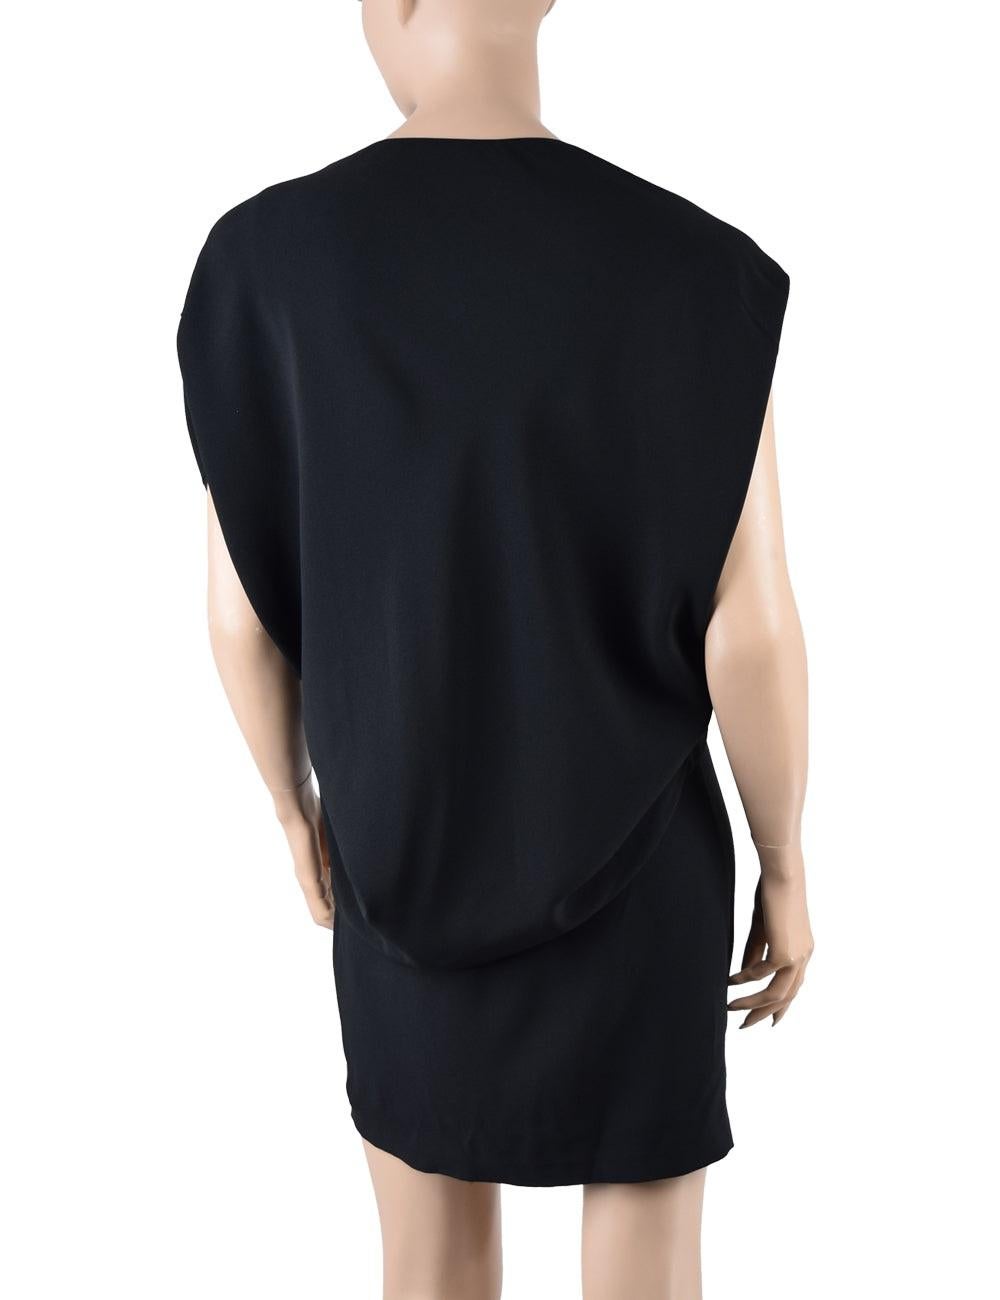 Barbara Bui US 4 Black Asymmetric Collar Dress with Tube Bottom For Sale 1